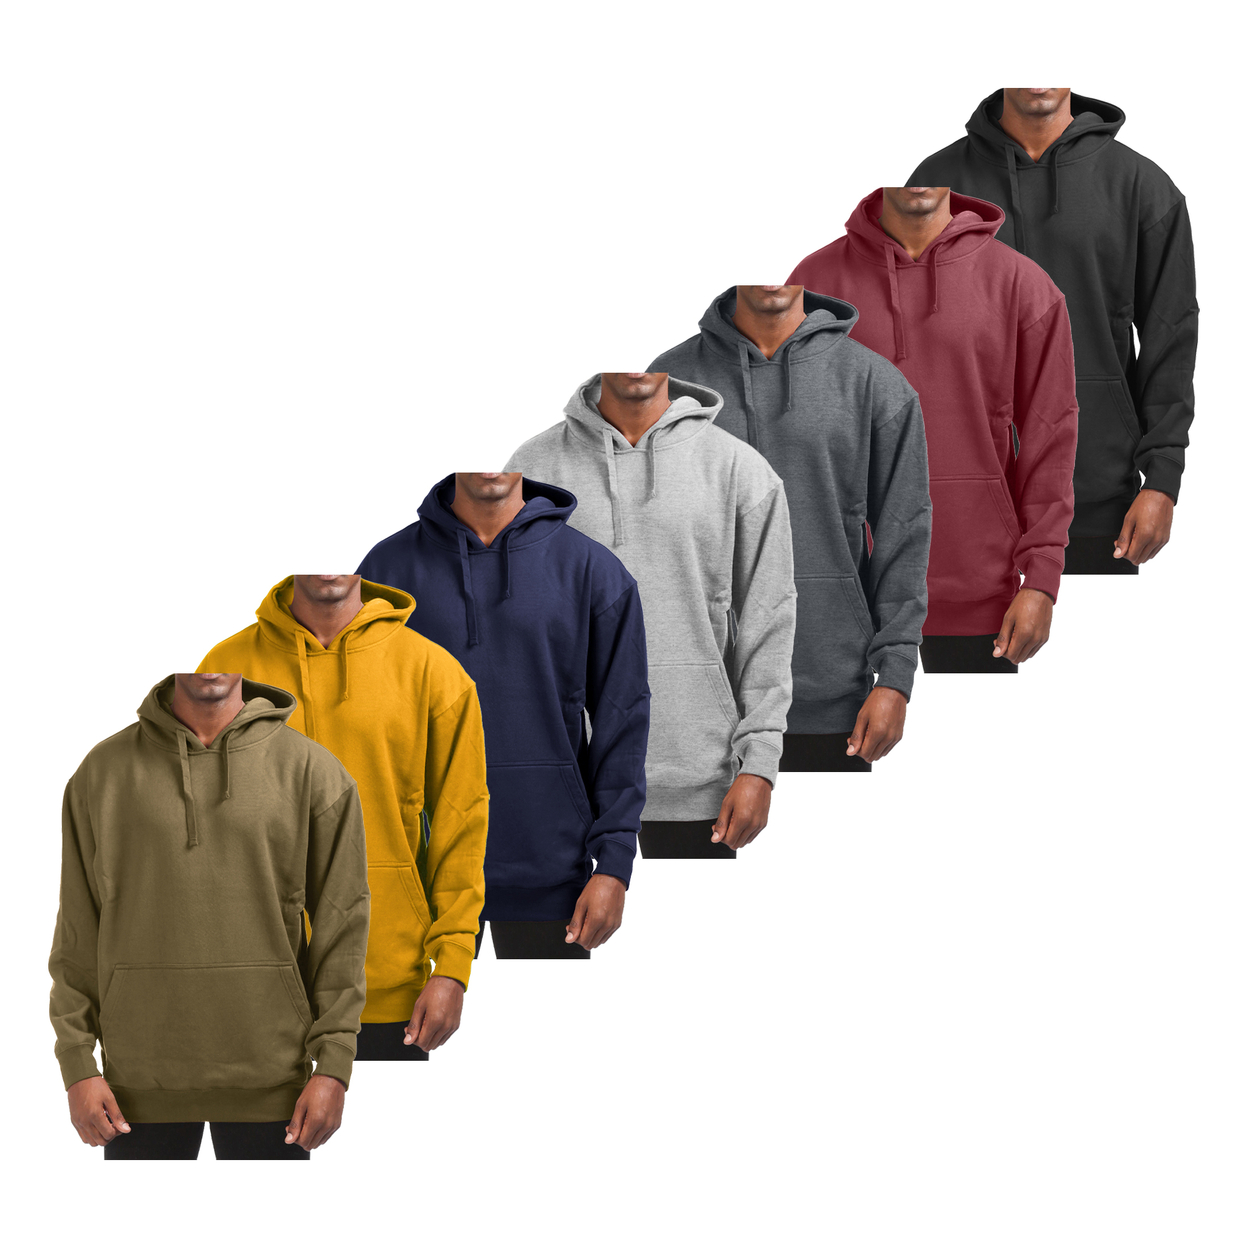 2-Pack: Men's Super-Soft Winter Warm Cotton-Blend Fleece Pullover Hoodie With Kangaroo Pocket - Black & Grey, X-large